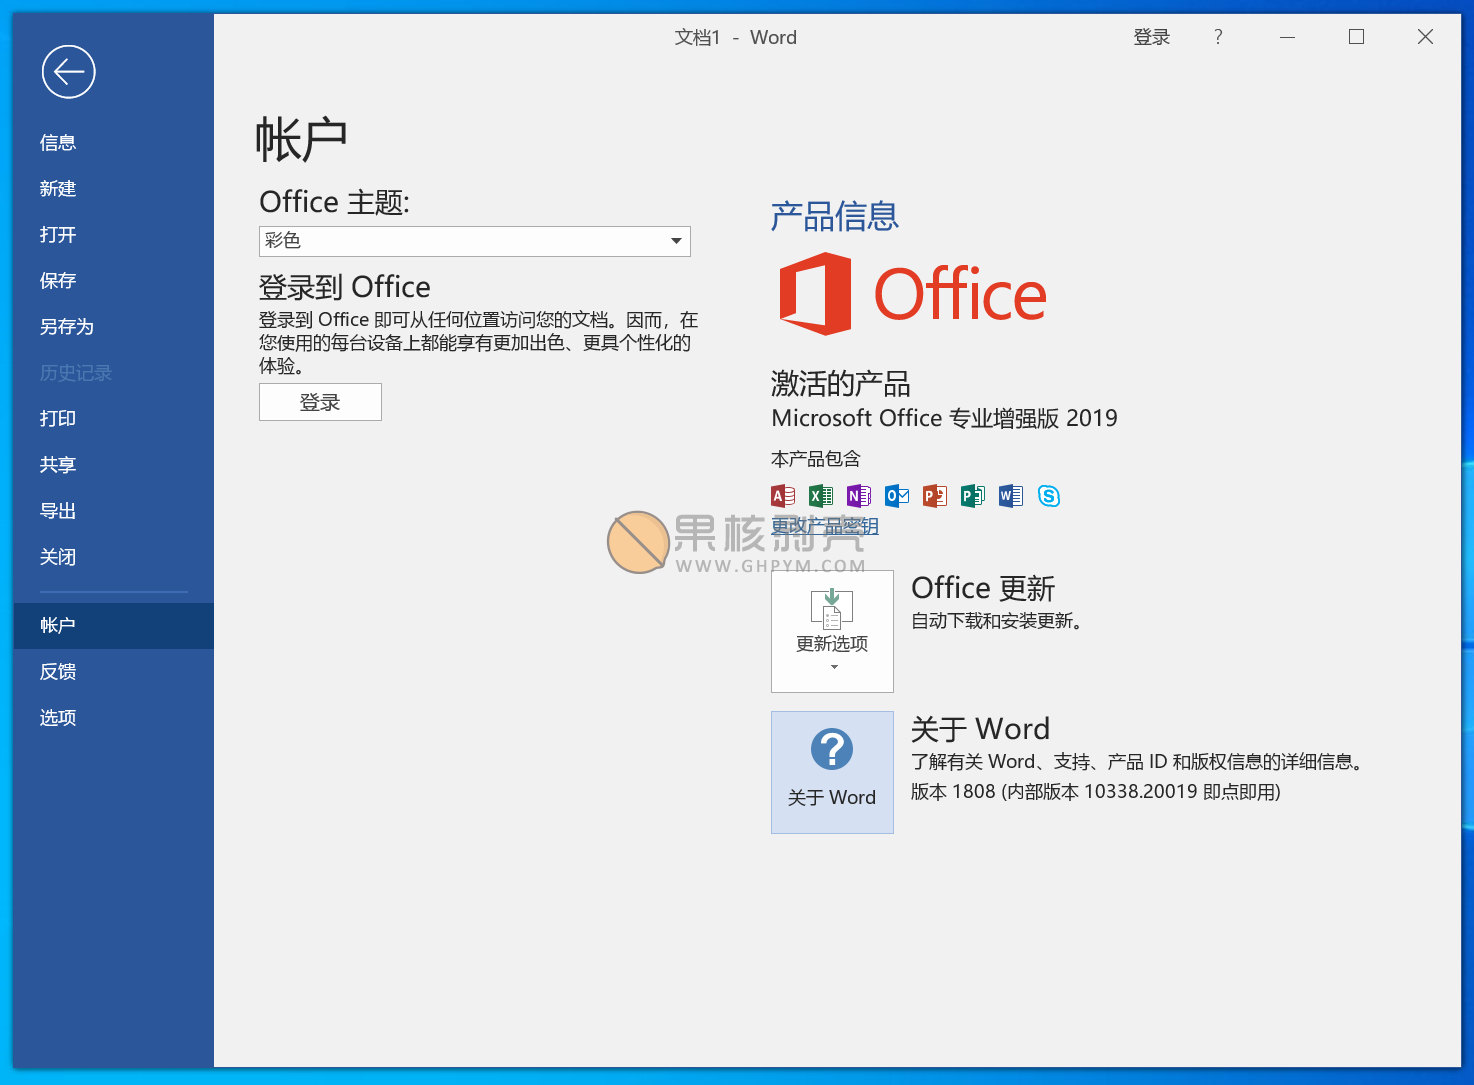 Microsoft Office 2019 2021年10月批量许可版